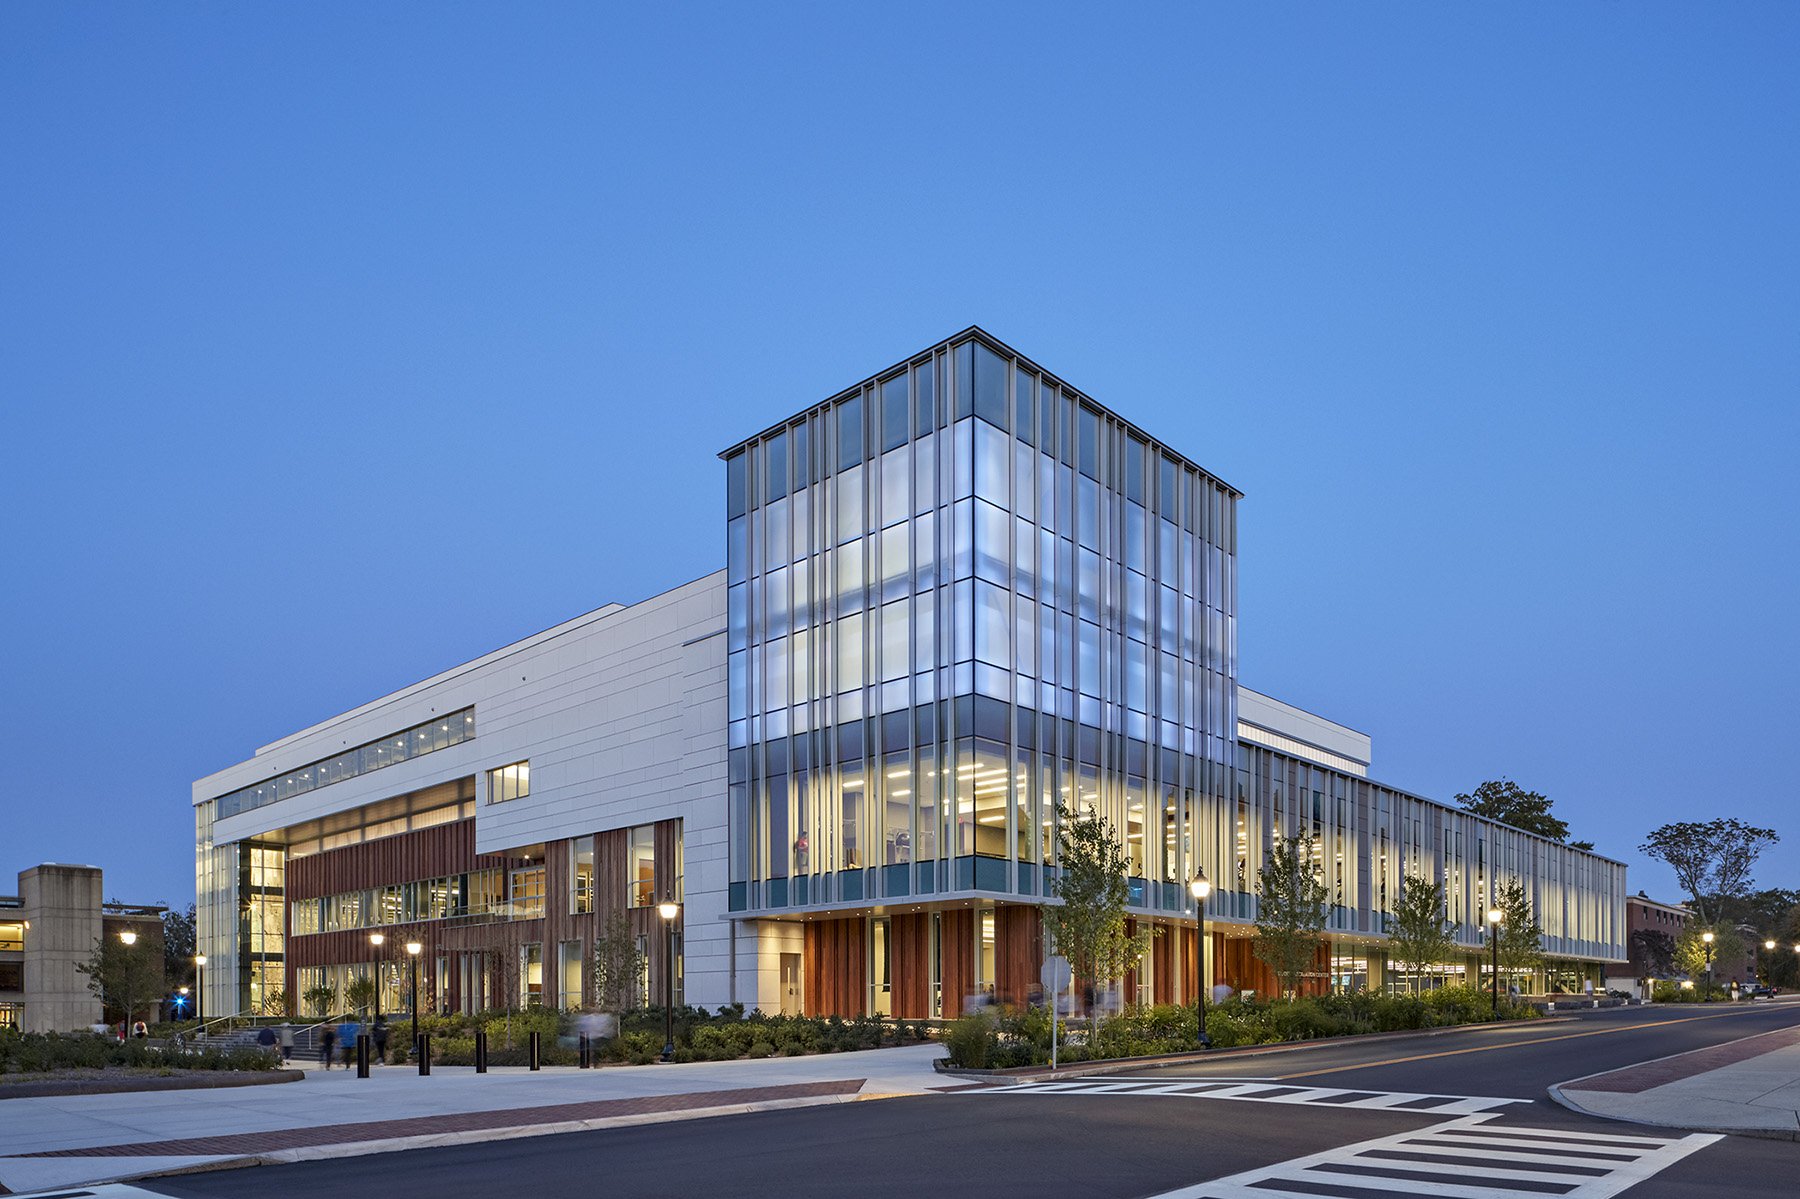 University of Connecticut / Student Recreation Center - JCJ Architecture